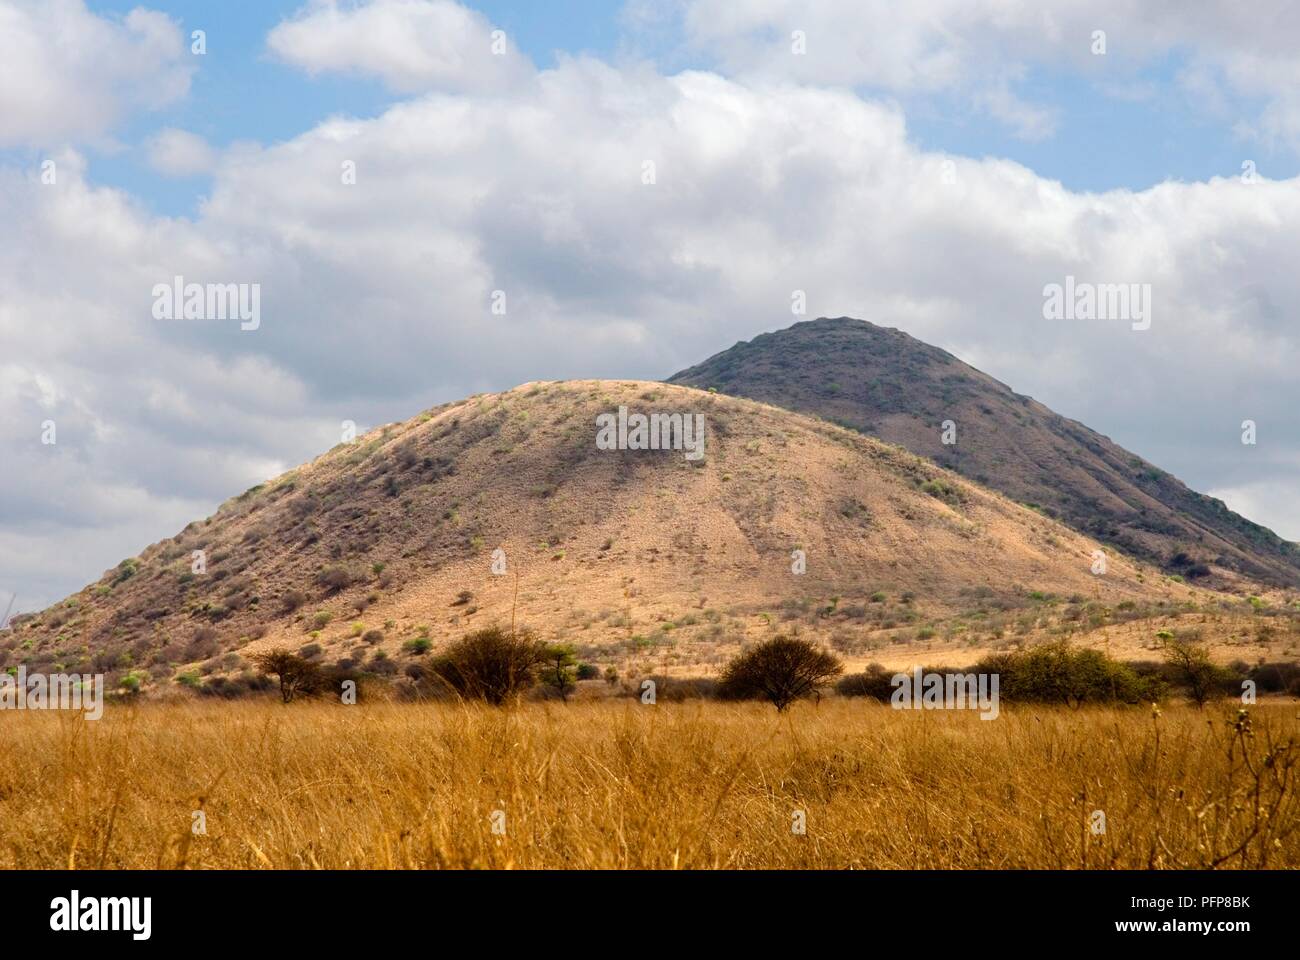 Kenia, Tsavo Nationalpark, kegelförmigen Berge steigen von Grasland Stockfoto